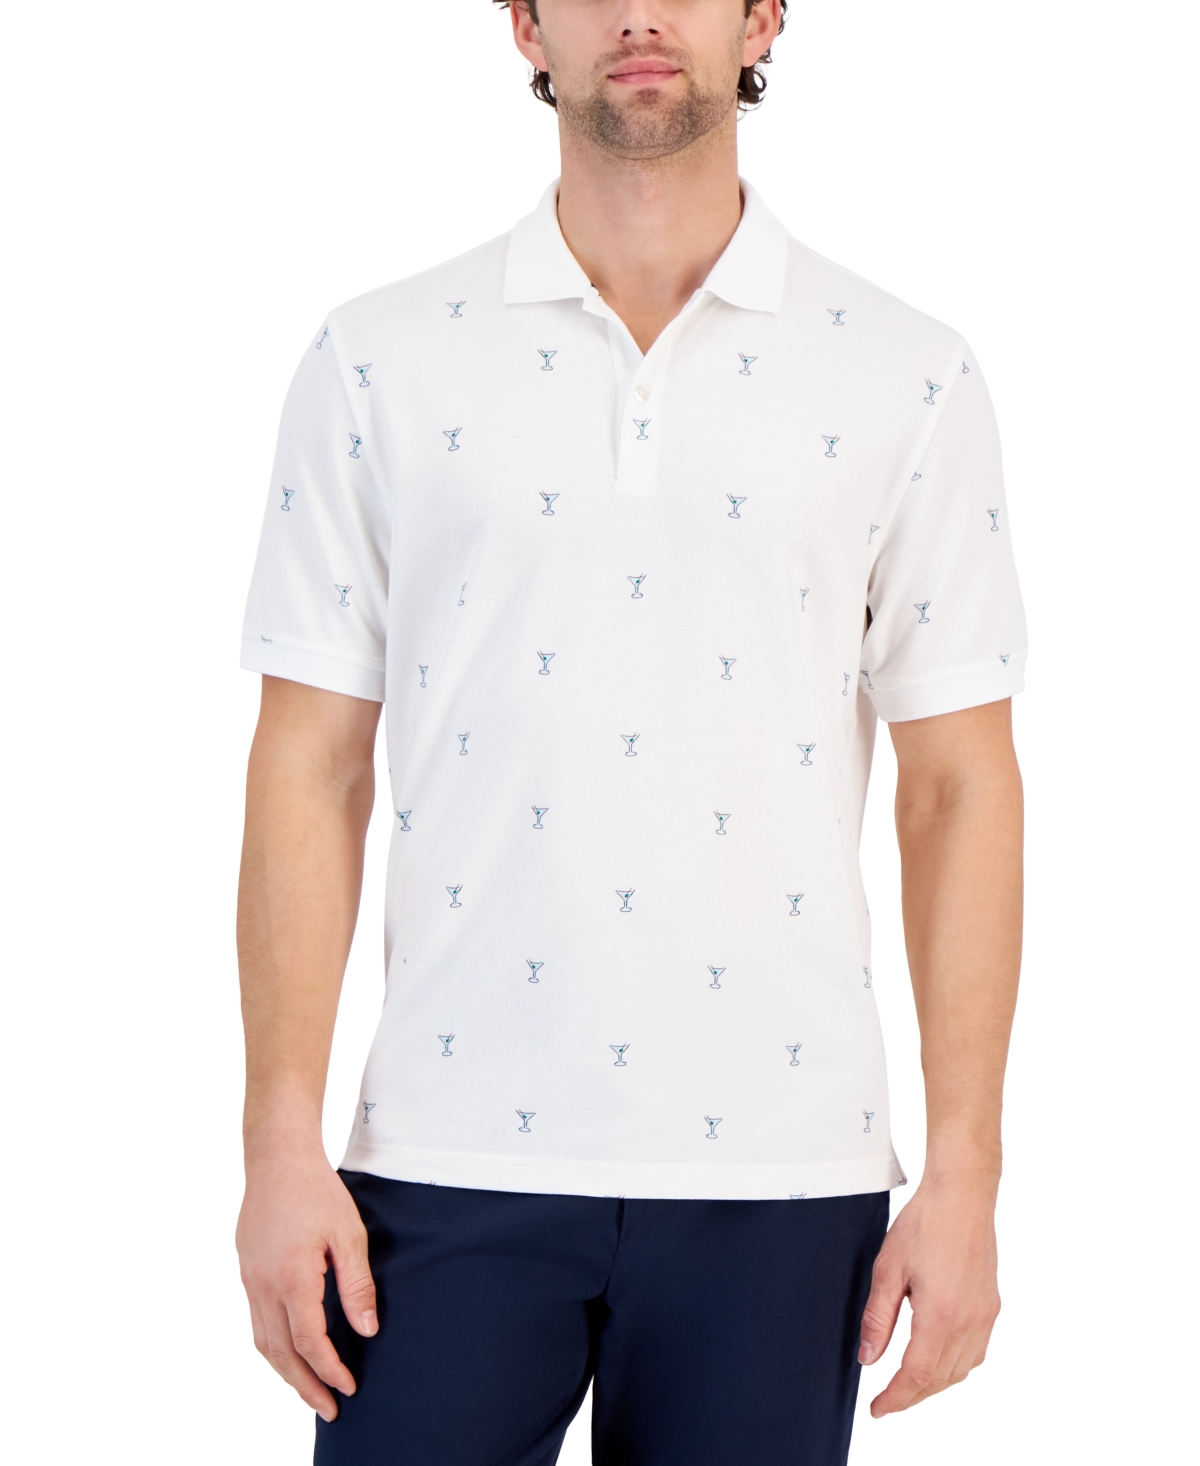 Men's Martini Graphic Pique Polo Shirt, Created for Macy's - Bright White